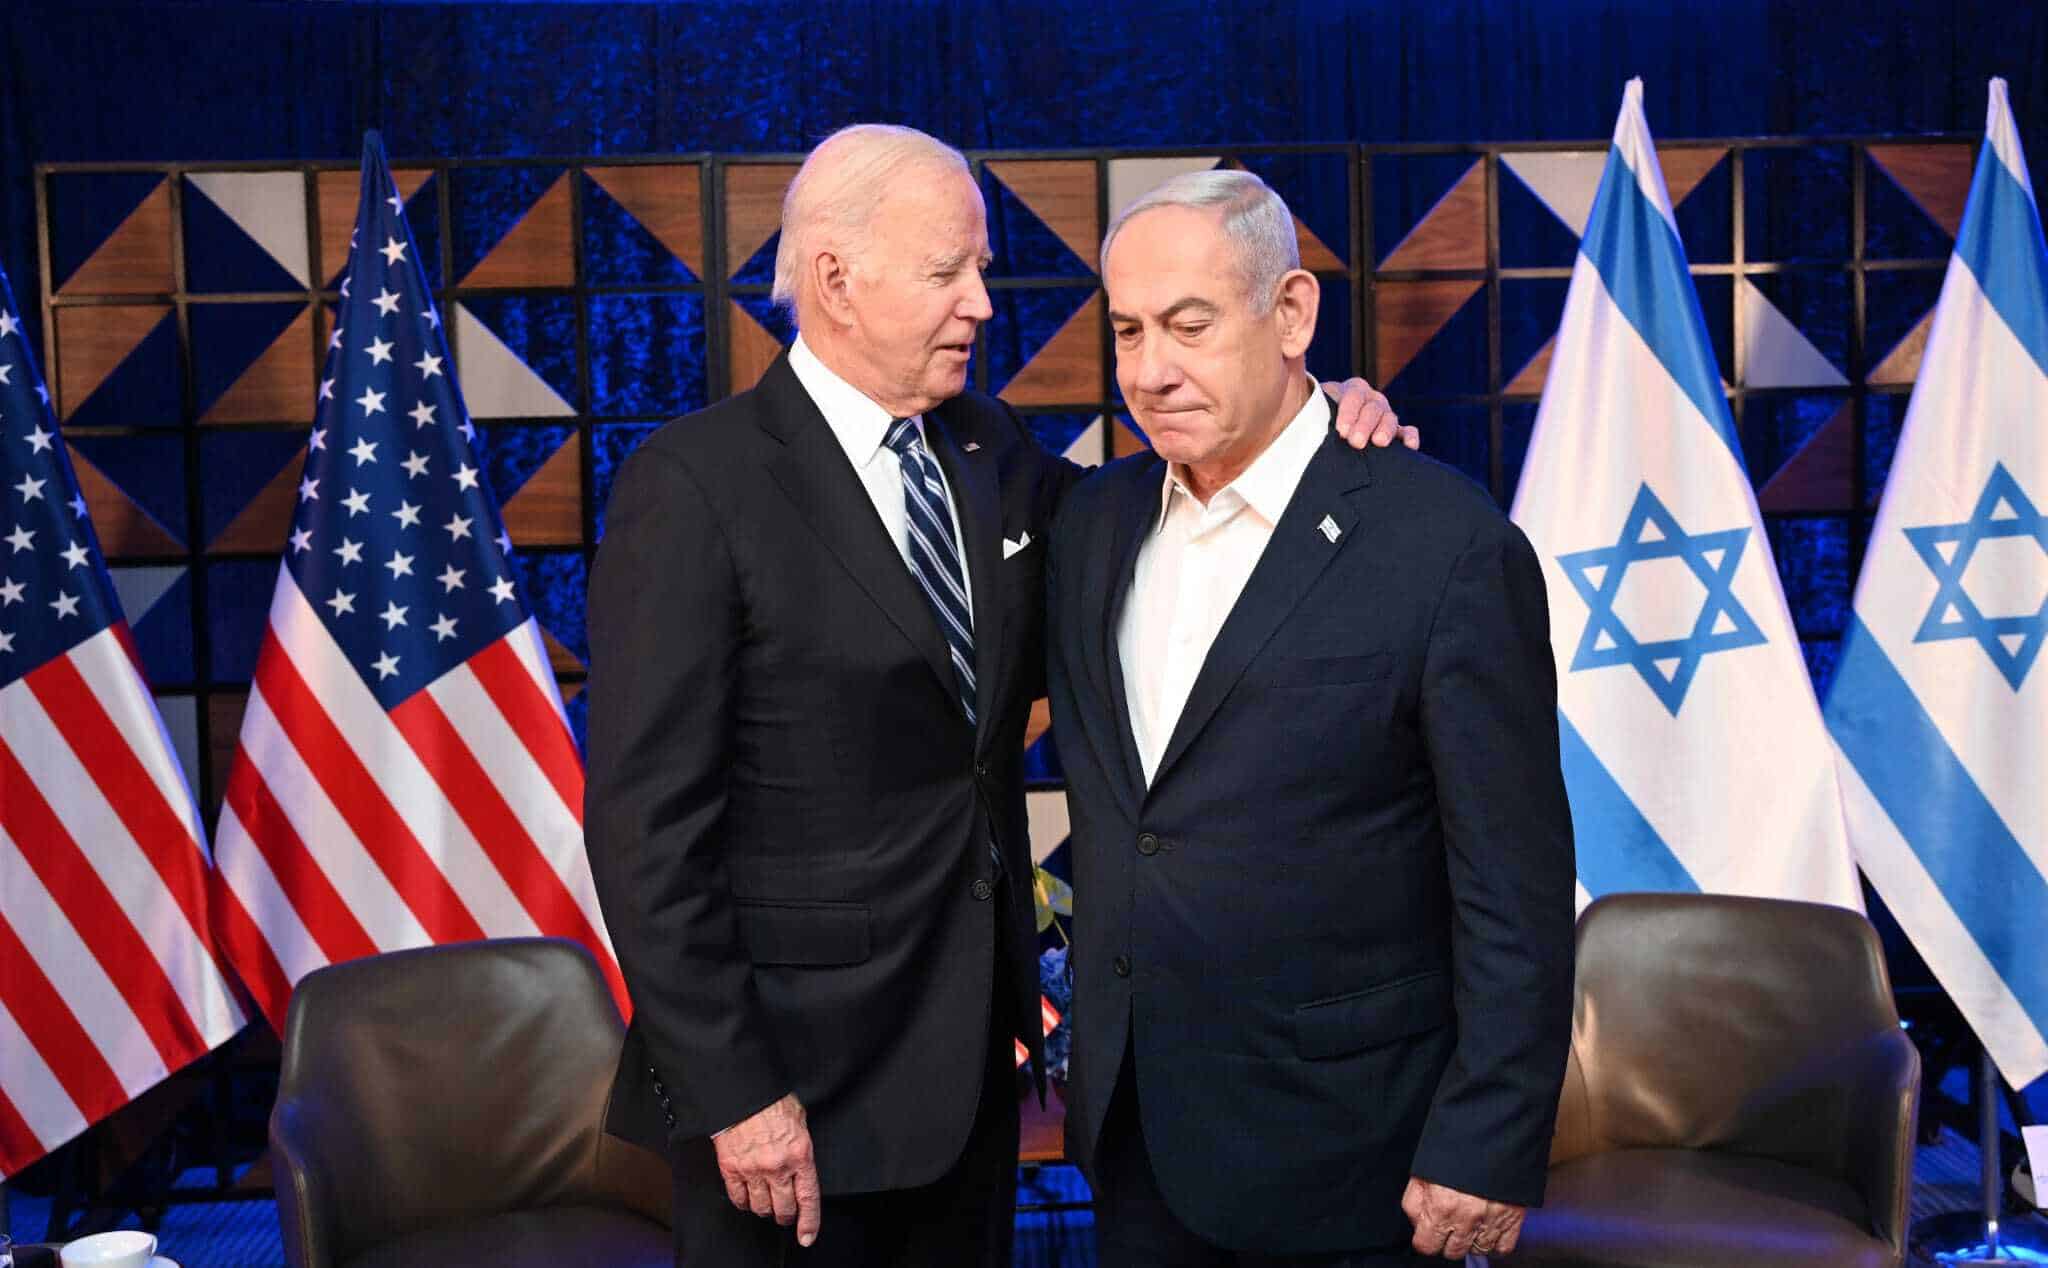 Netanyahu counters Biden: Most Americans support Israel